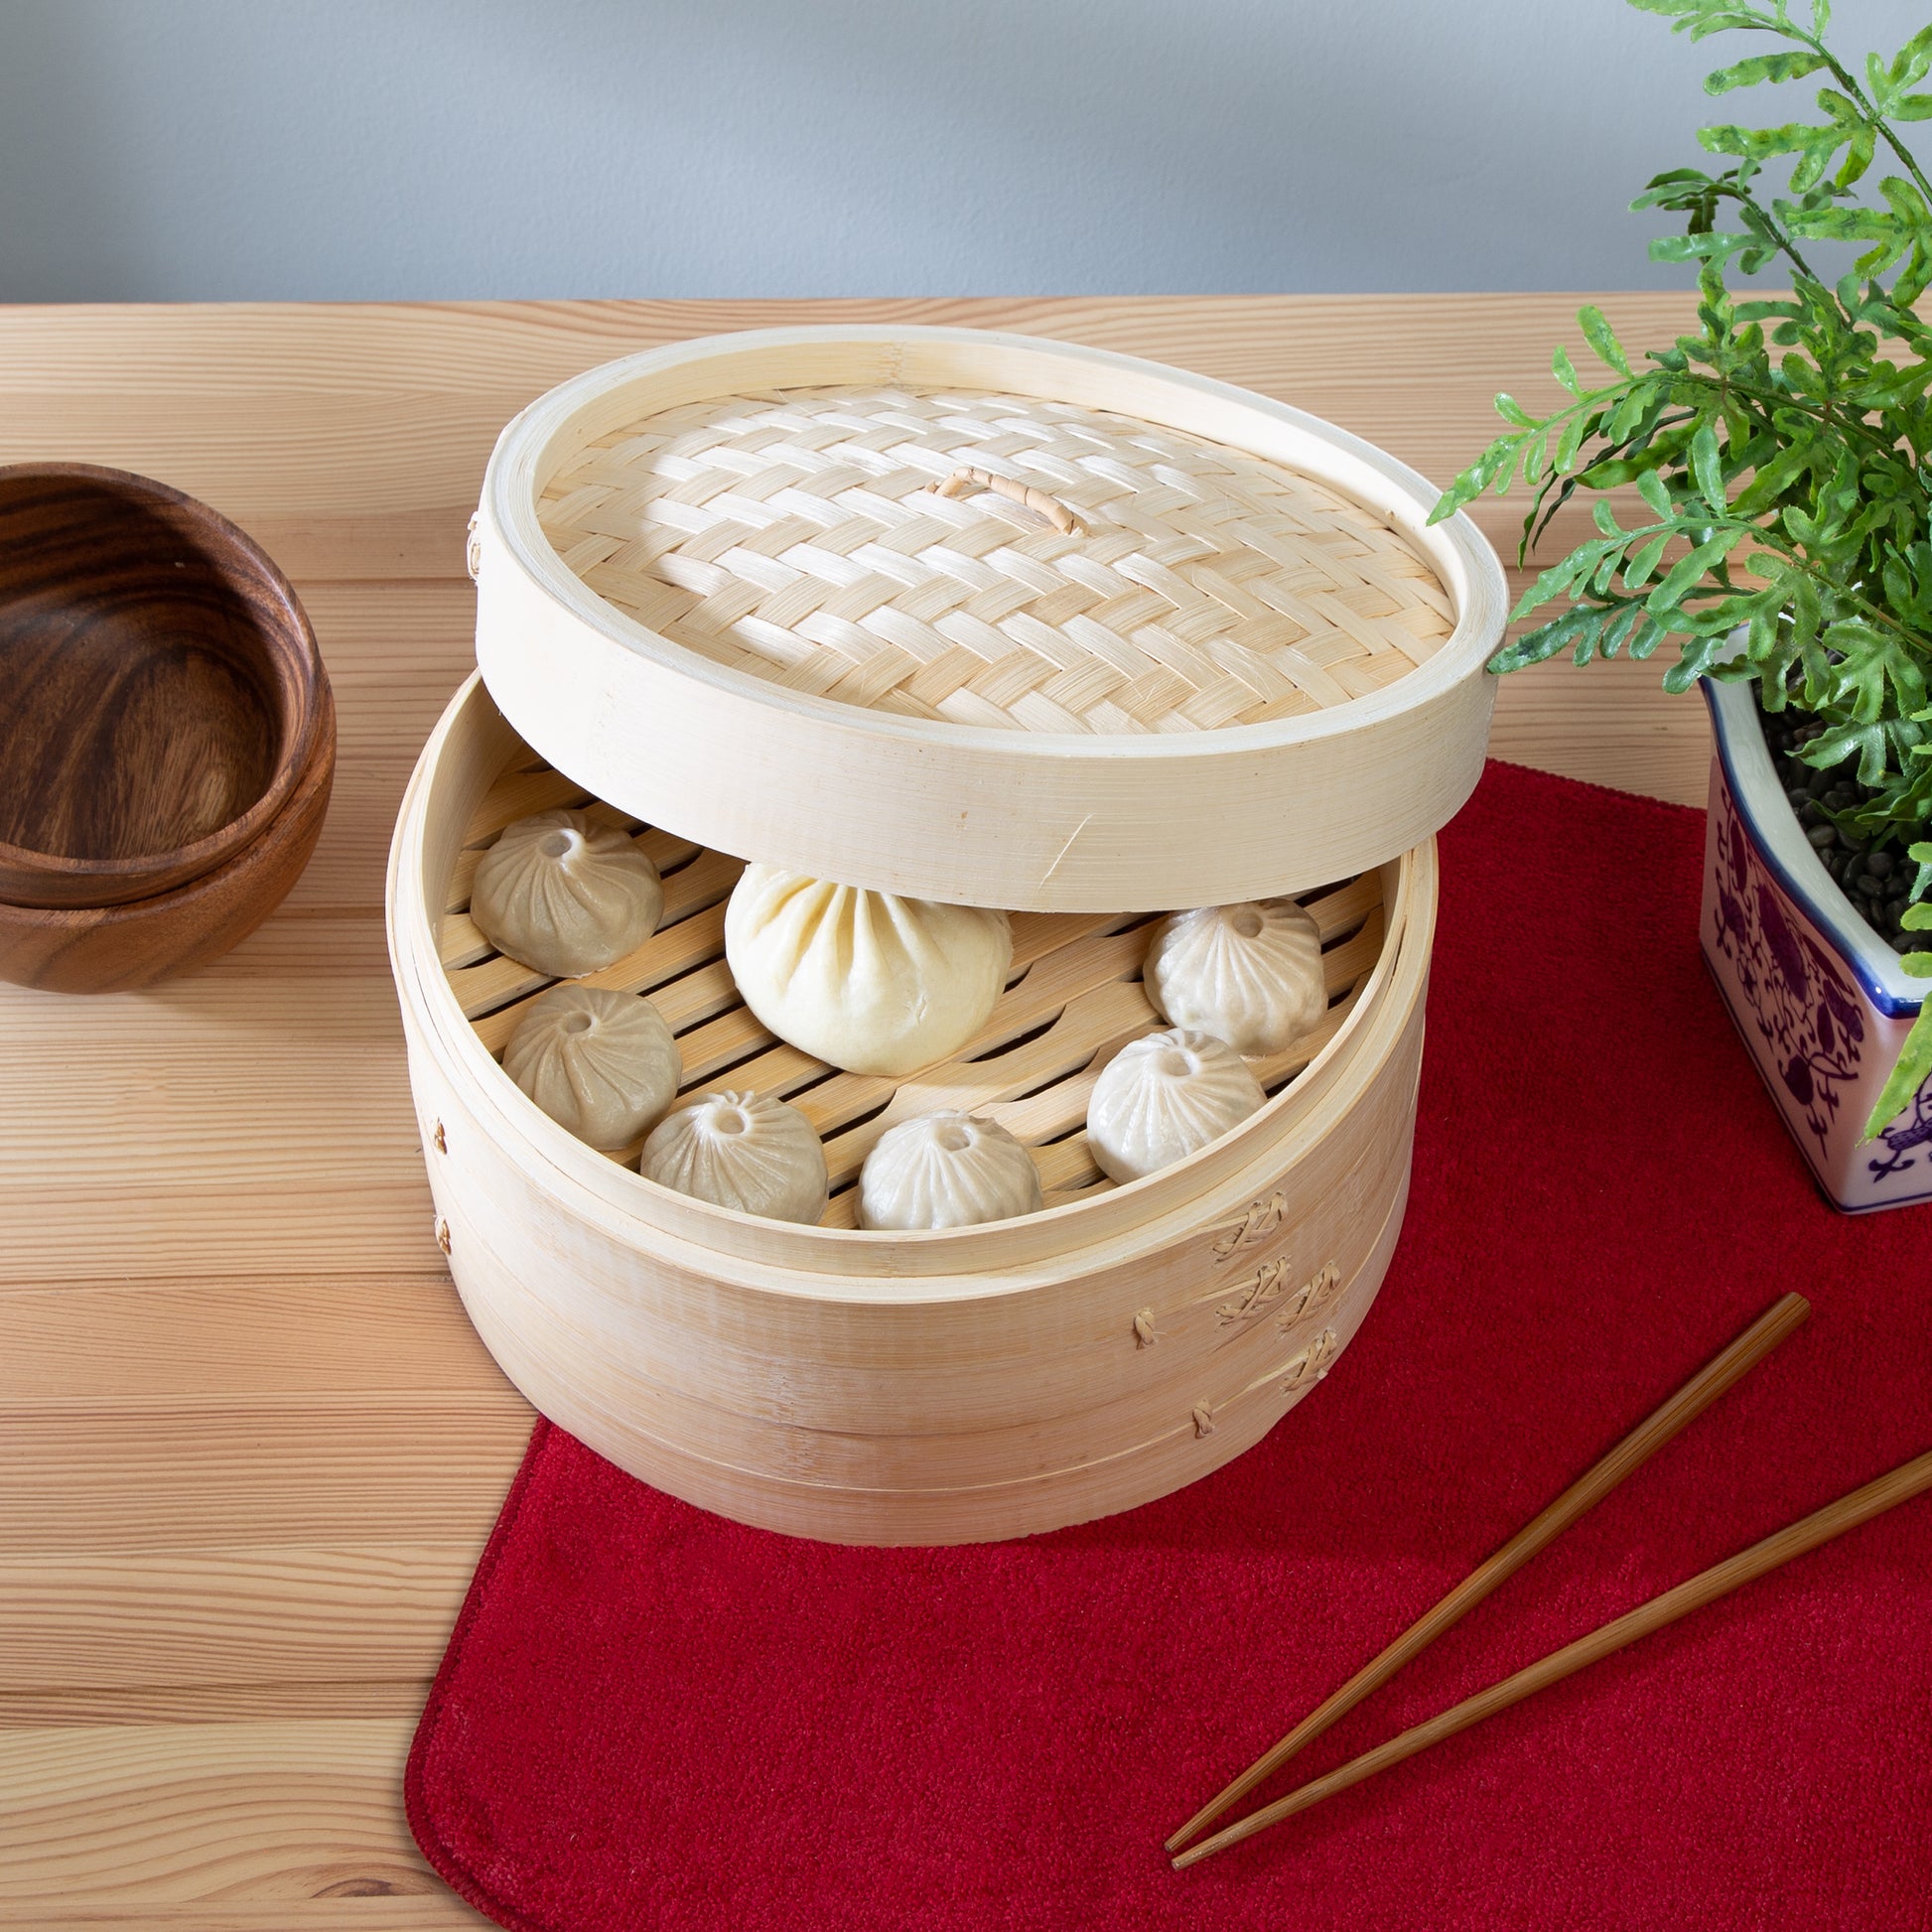 Prime Home Direct 10 inch Bamboo Steamer Basket, 2 Tier Food Steamer, Natural 2